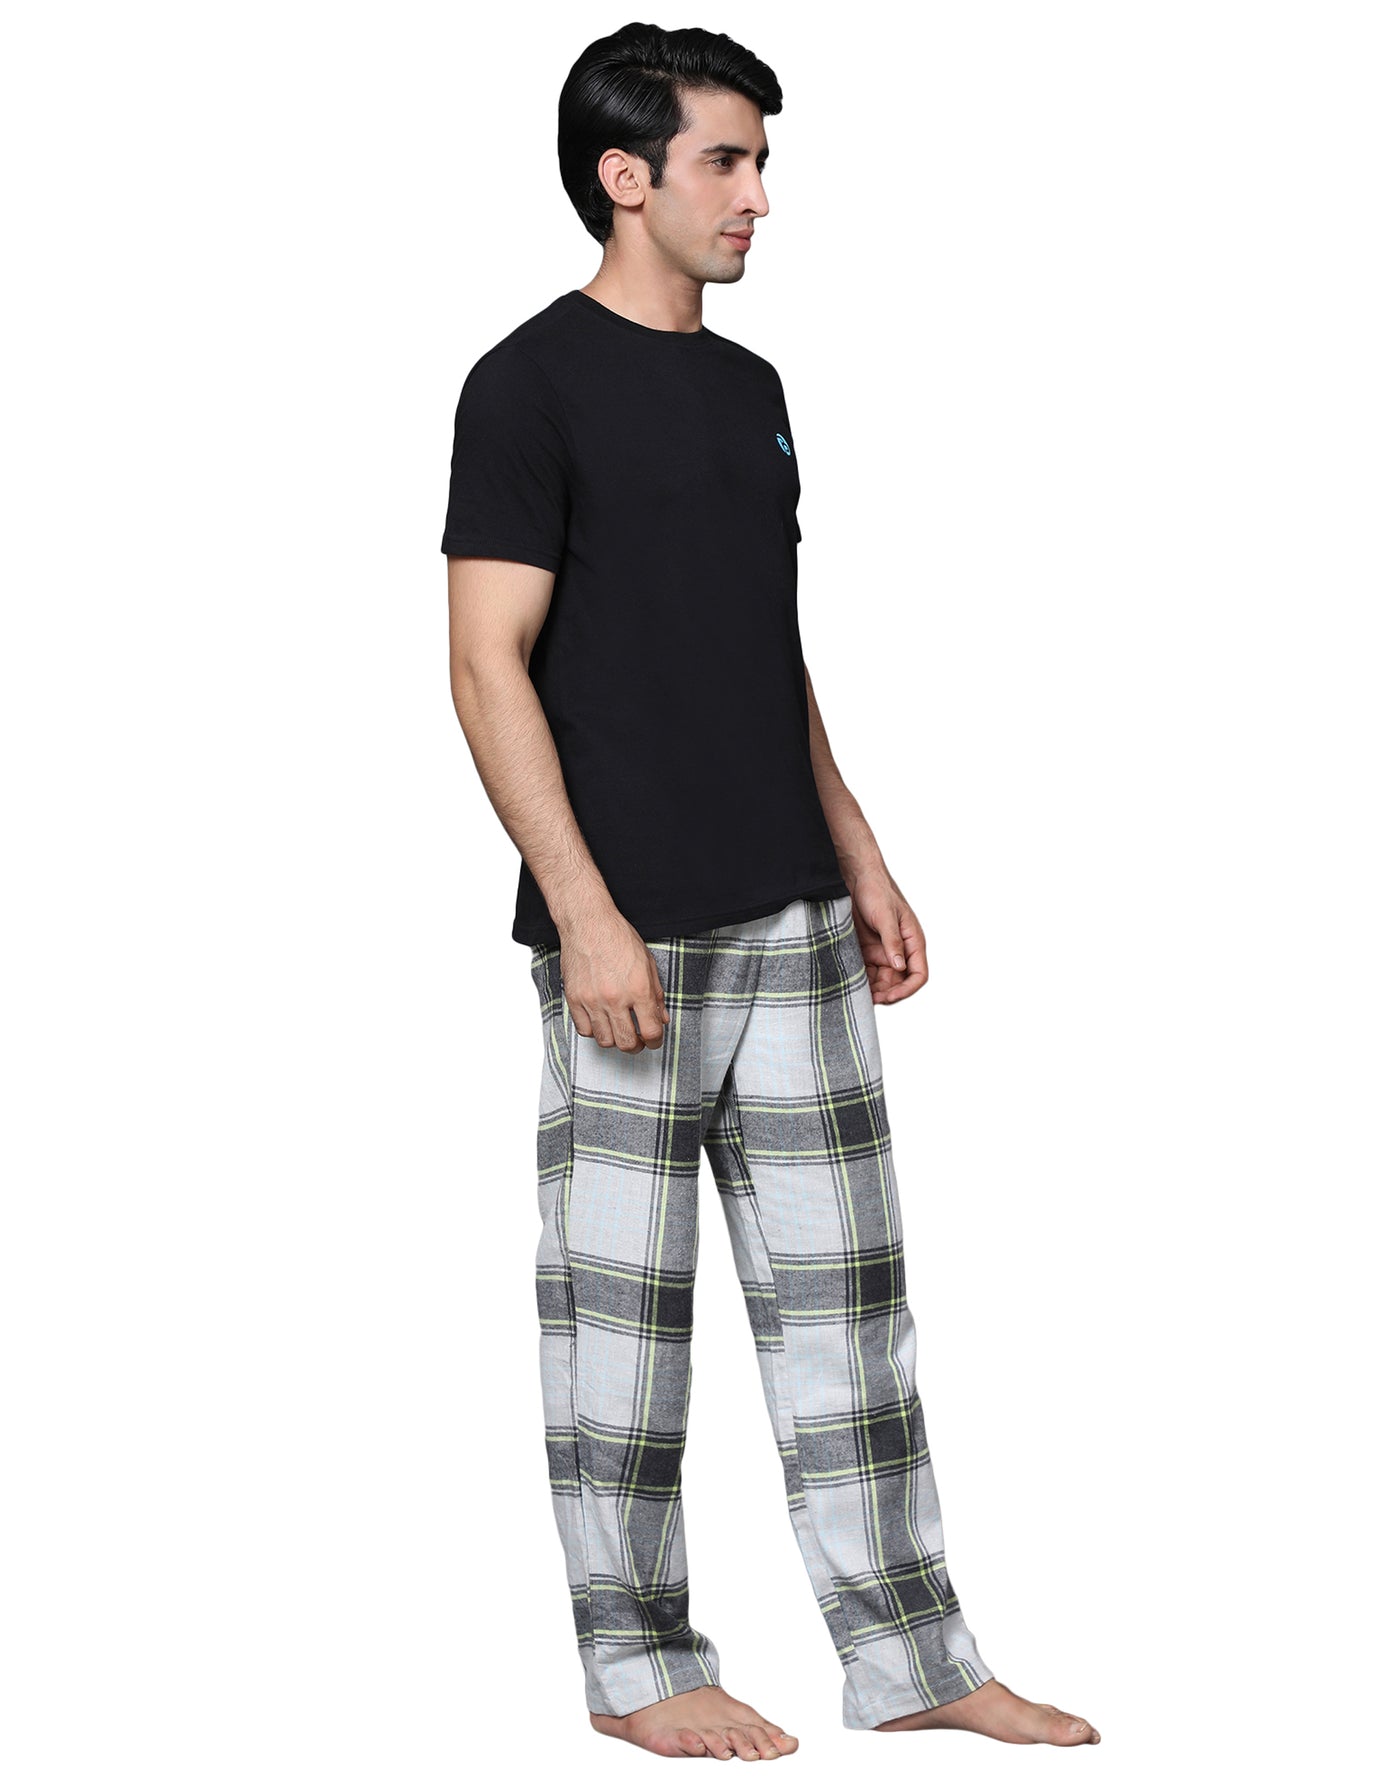 Pyjama Set for Men-Black & Yellow Checked